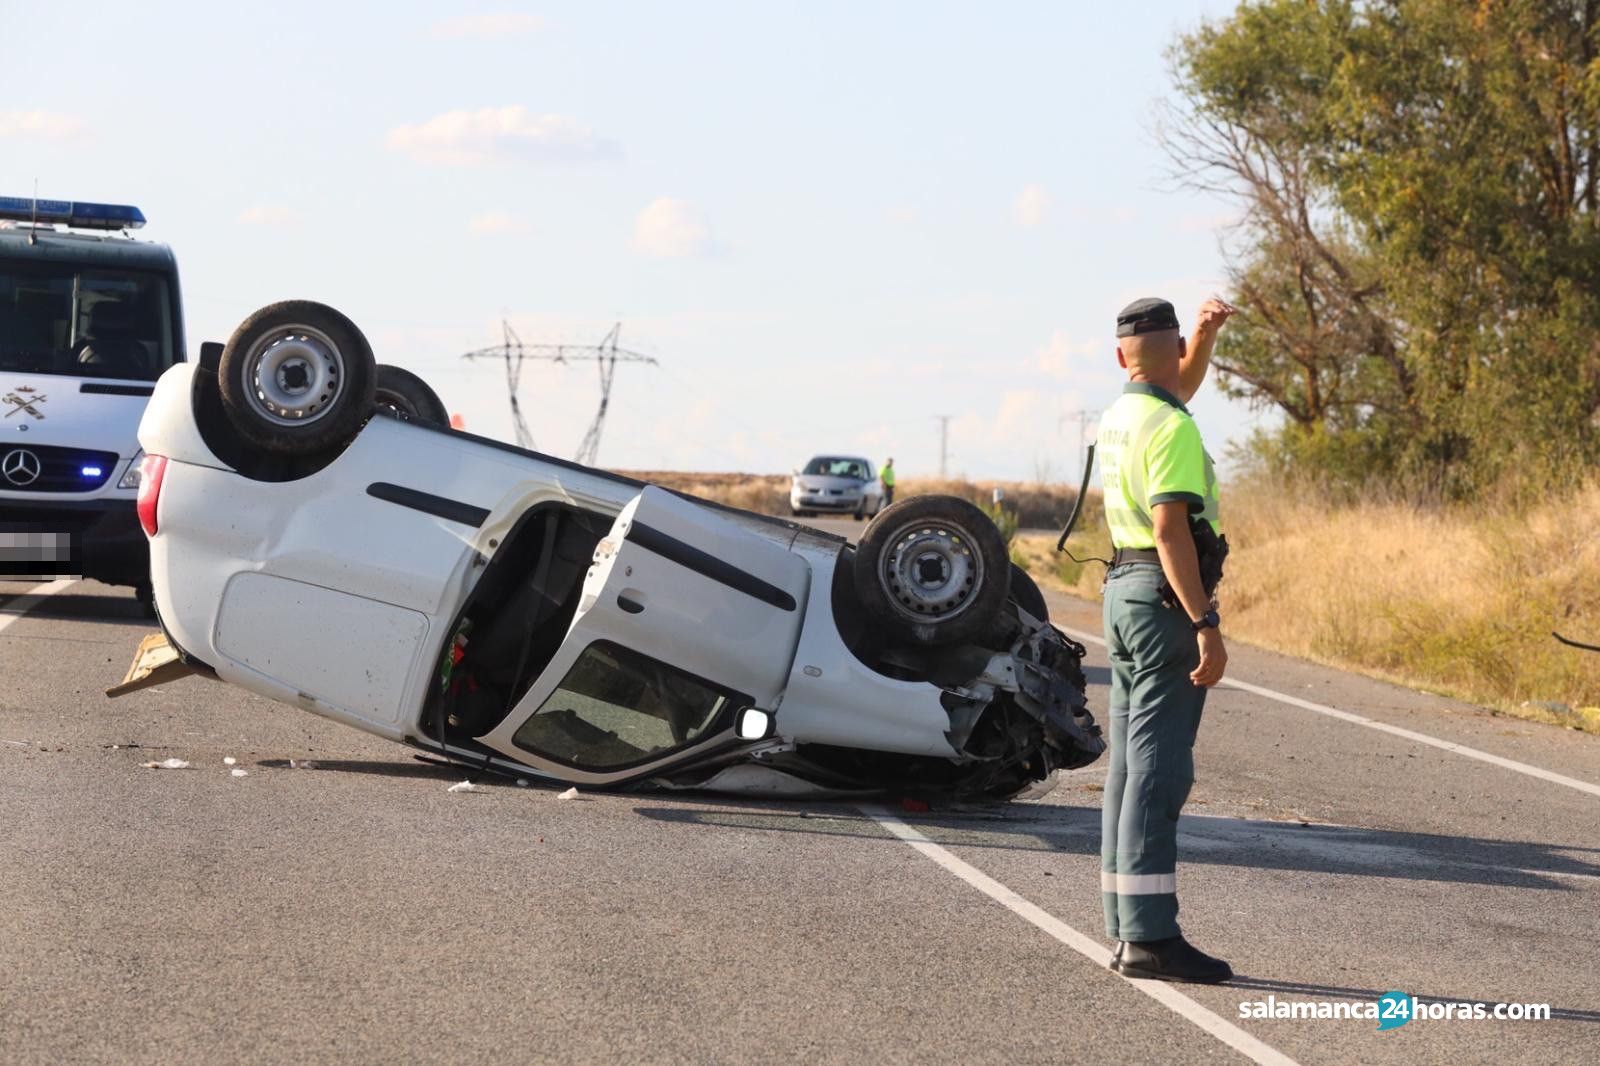  Accidente en carretera de Béjar 6 